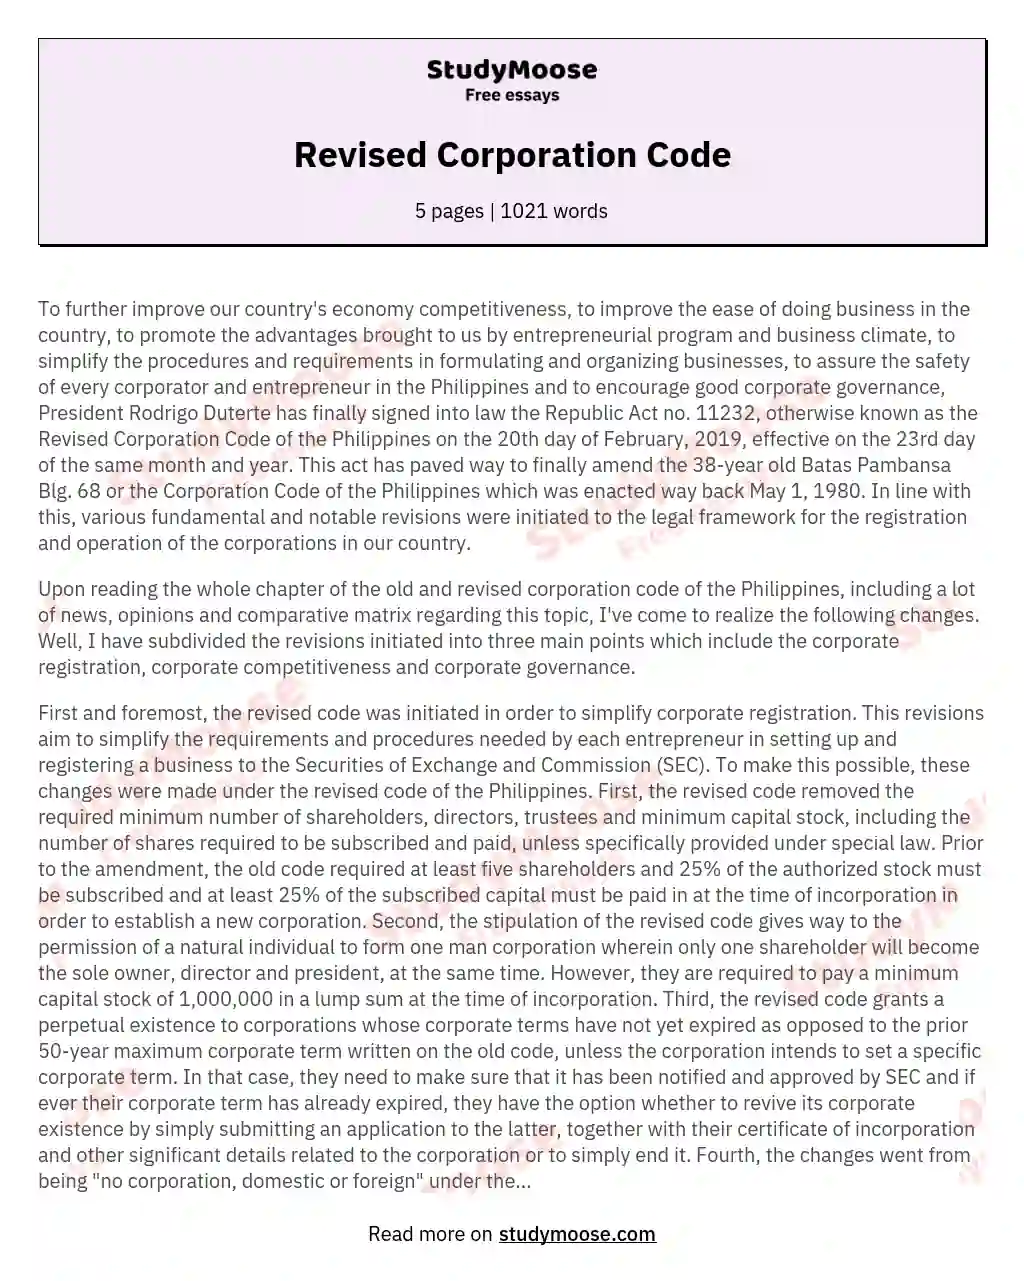 Revised Corporation Code essay